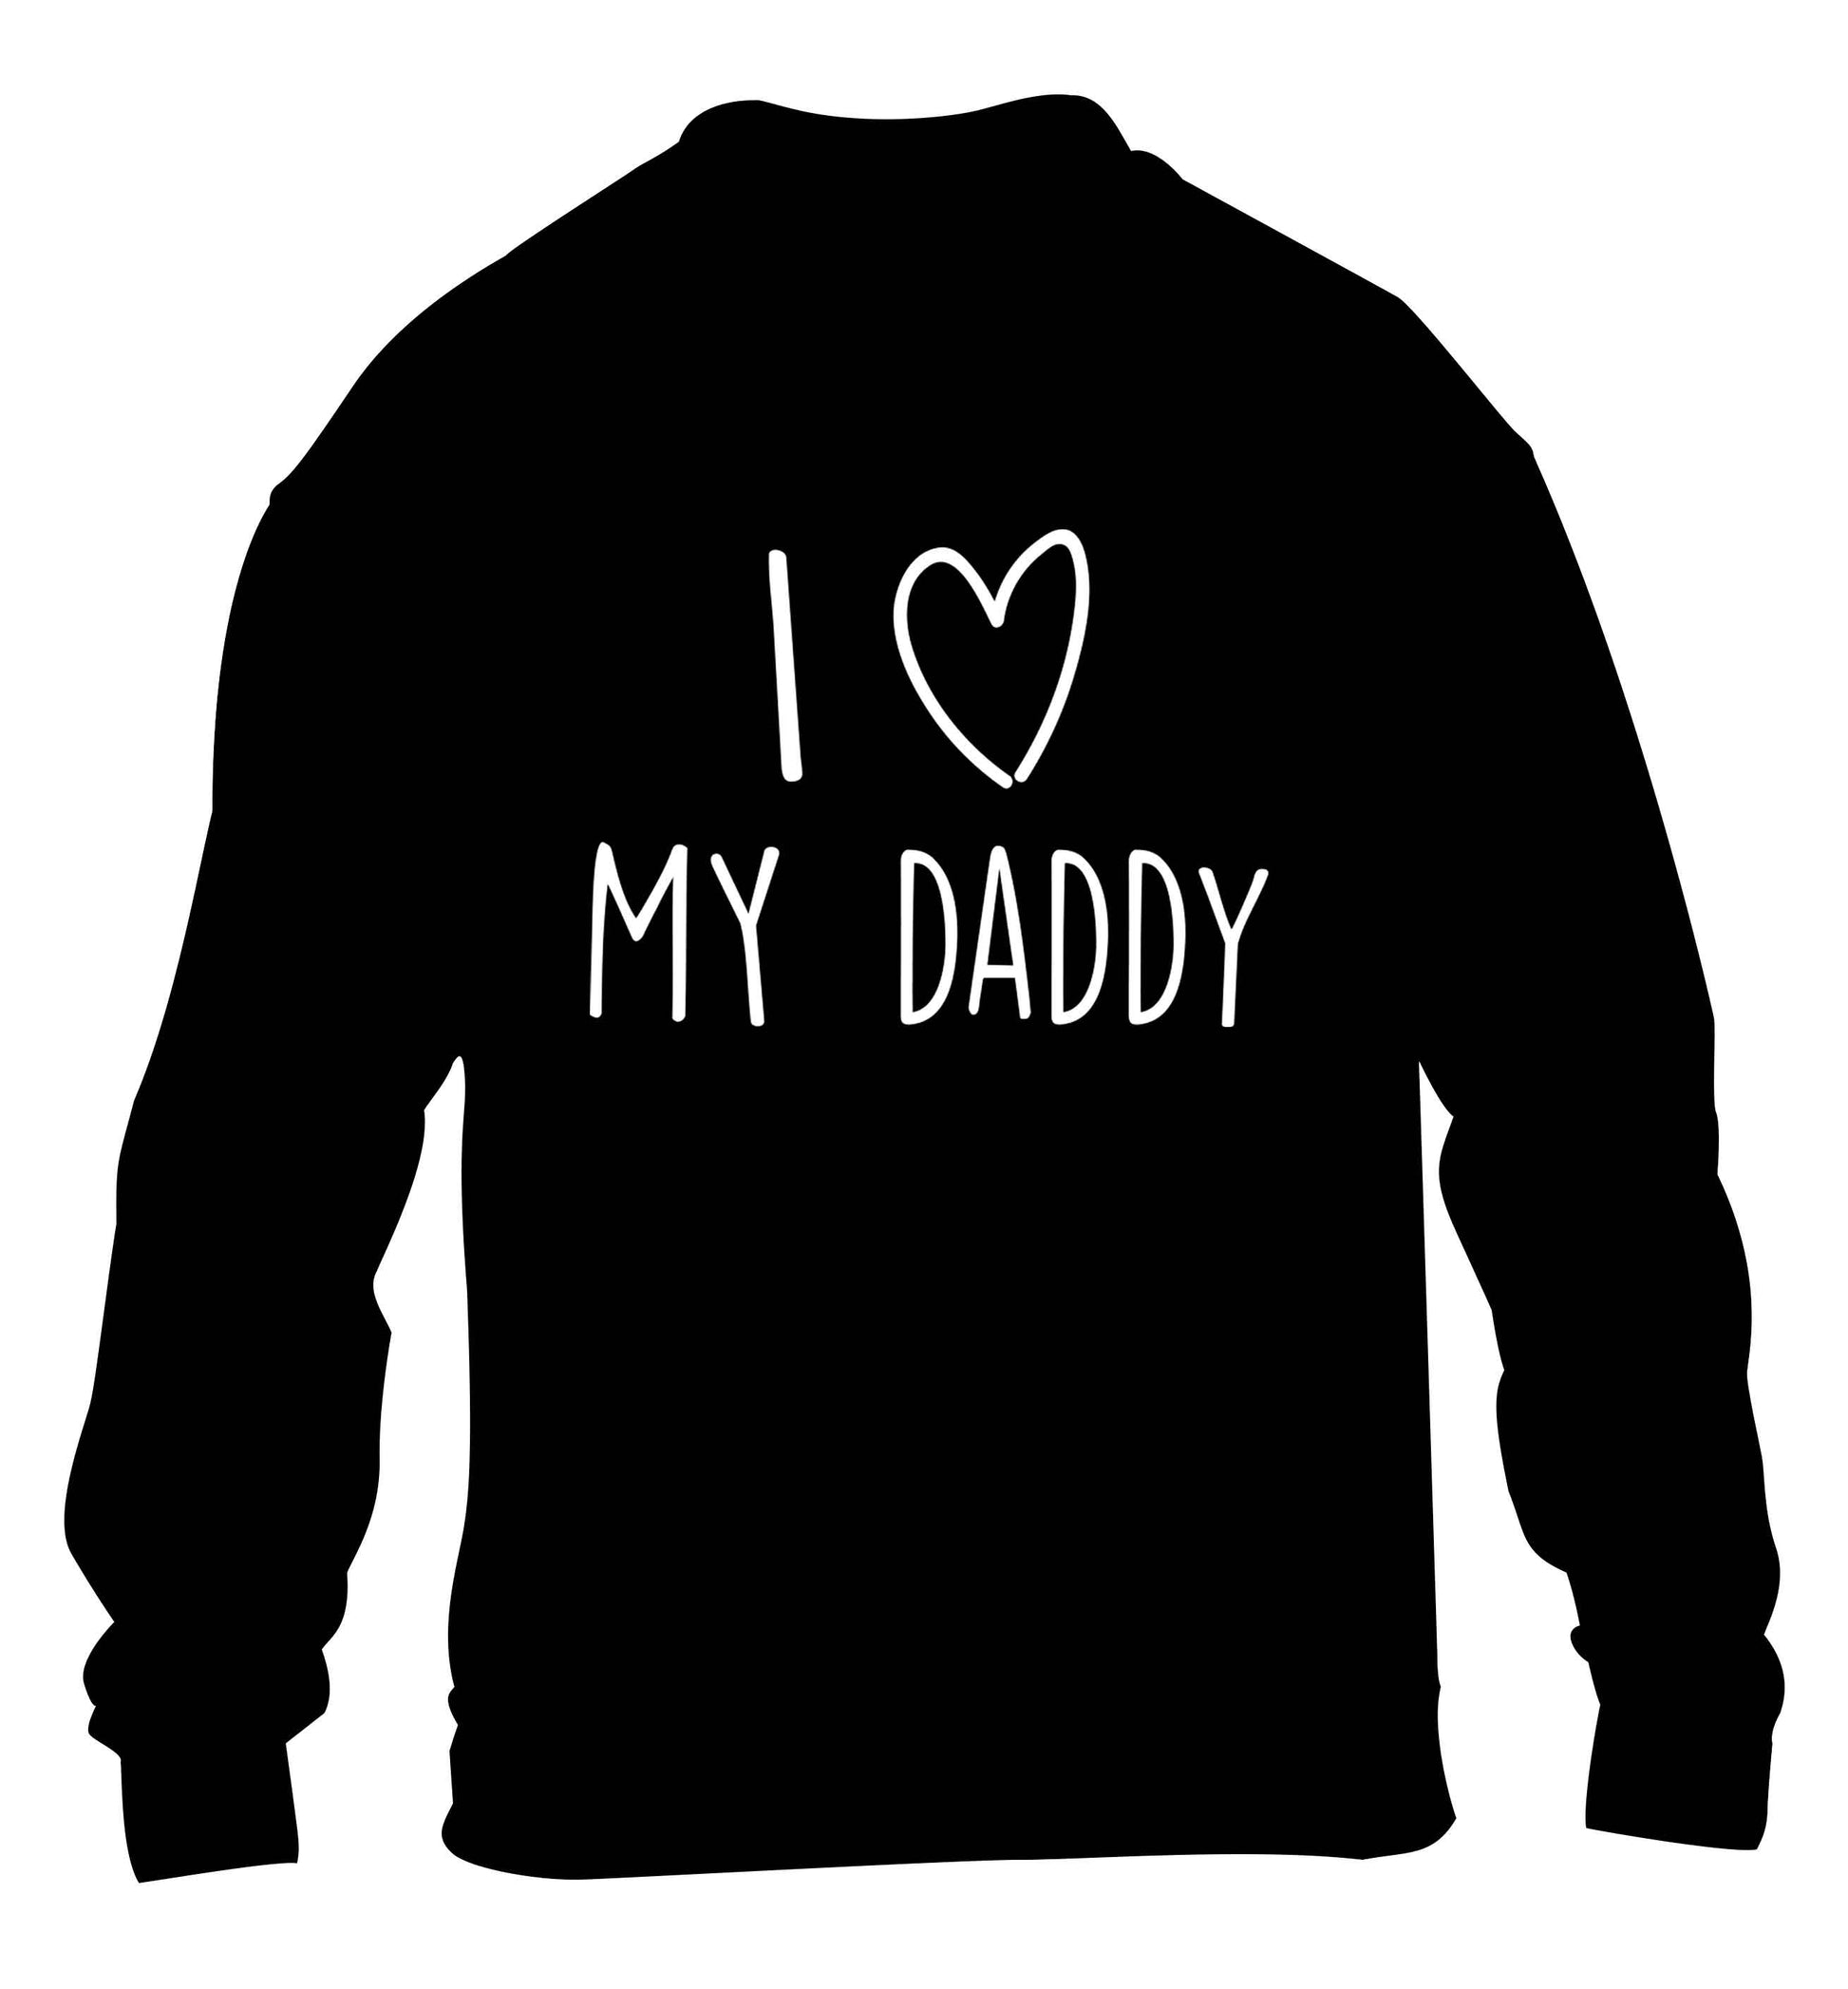 I love my daddy children's black sweater 12-13 Years